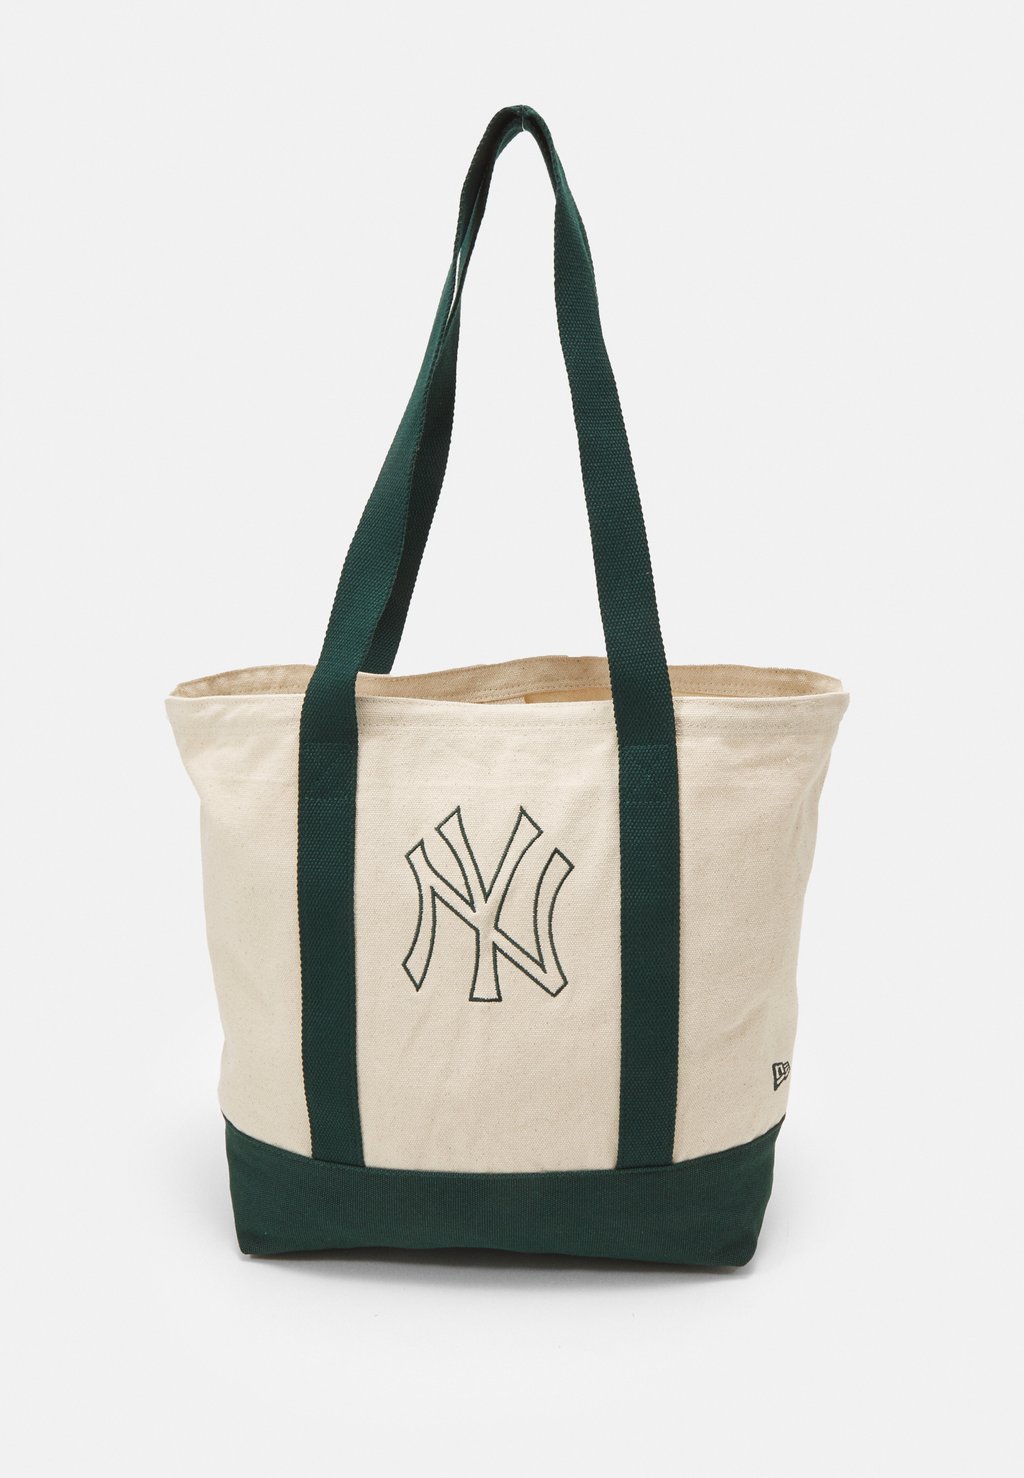 Сумка для покупок Mlb Premium Tote Bag New Era, цвет dark green/off-white сумка для покупок mlb premium tote bag new era цвет dark green off white